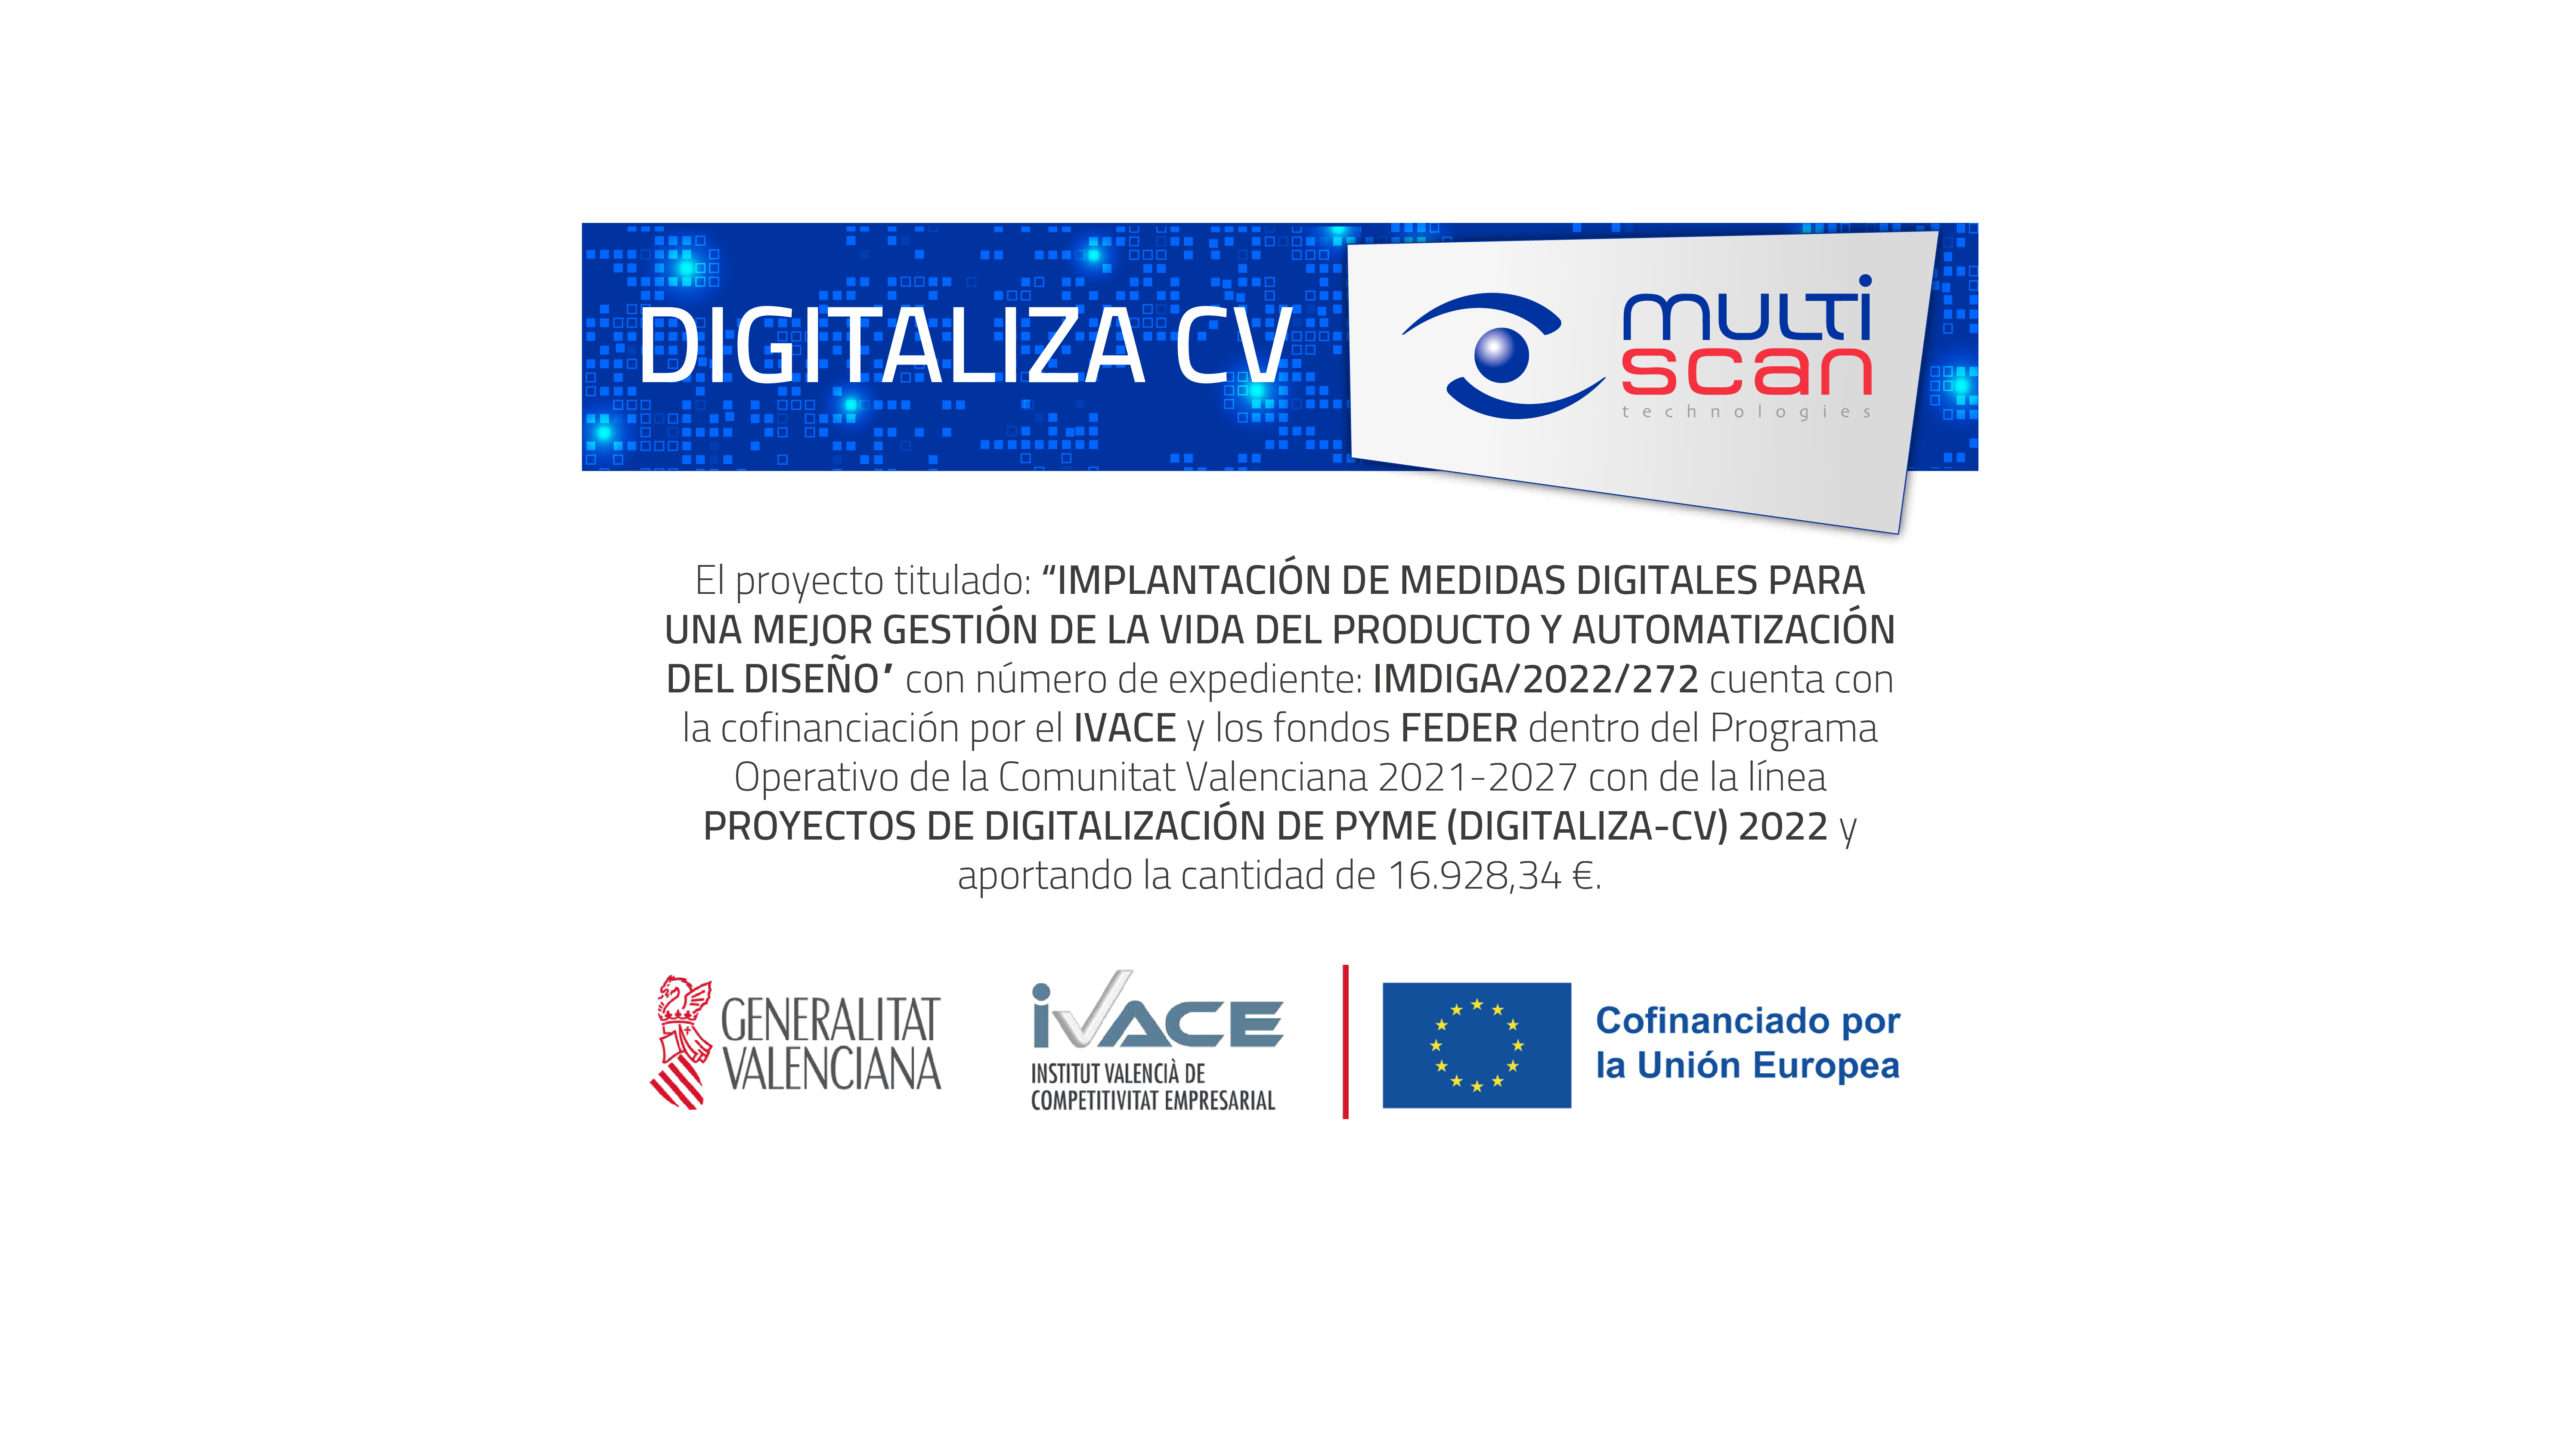 Multiscan Technologies accede al programa DIGITALIZA-CV 2022